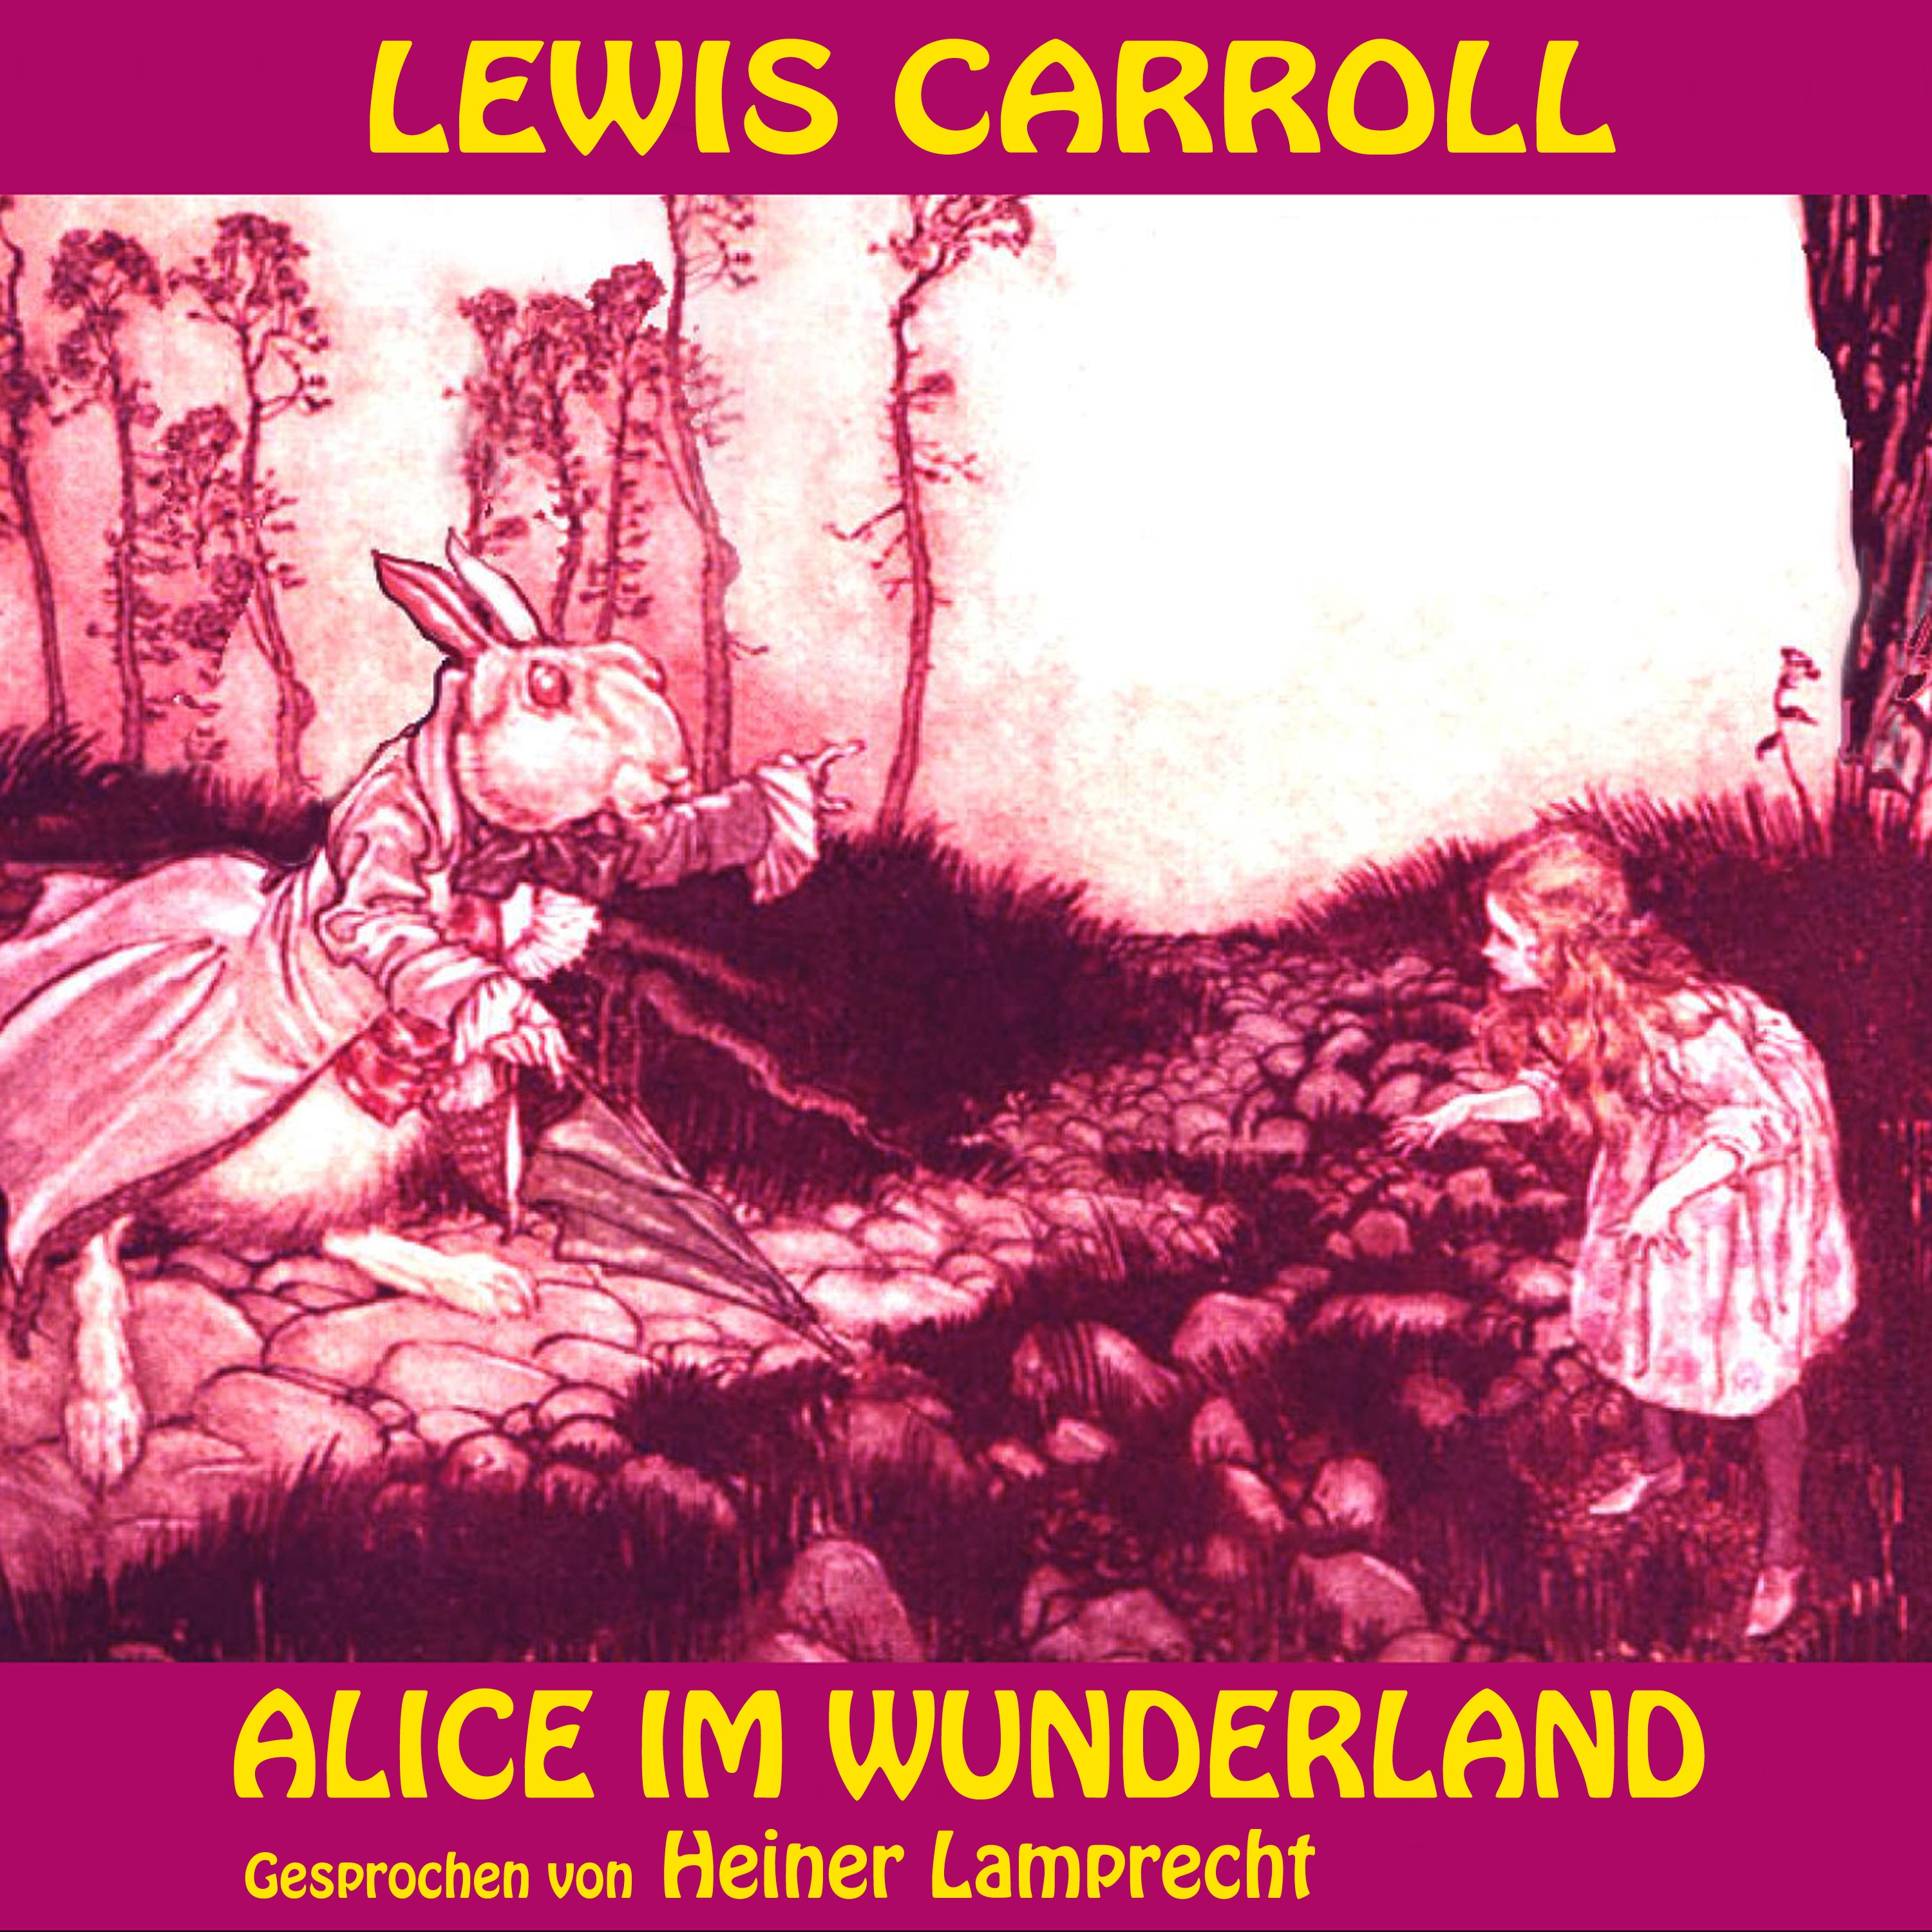 Kapitel 7: Alice im Wunderland (Teil 4)